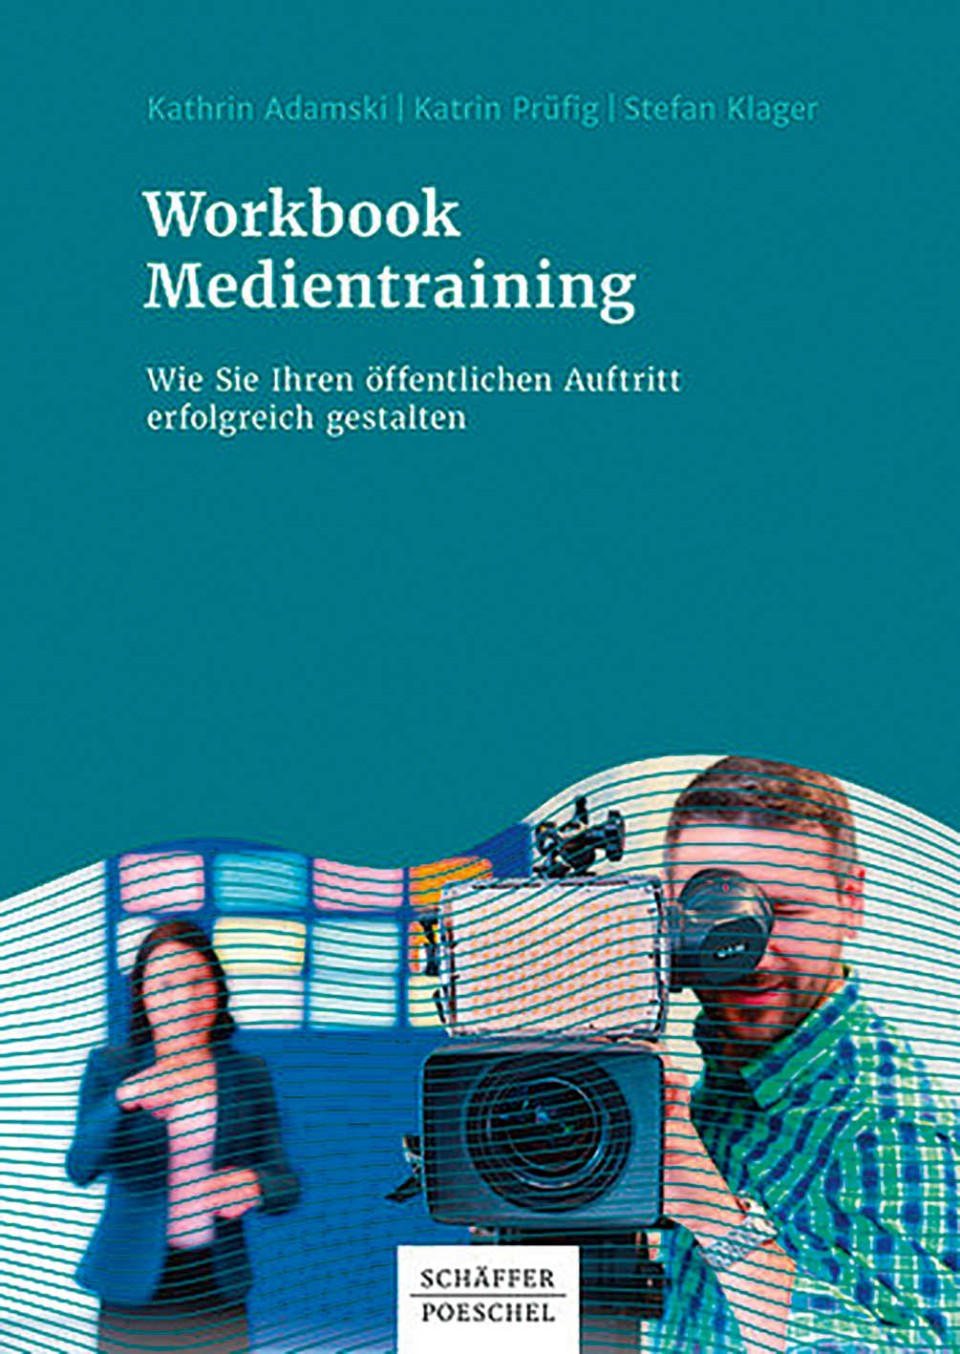 workbook-medientraining